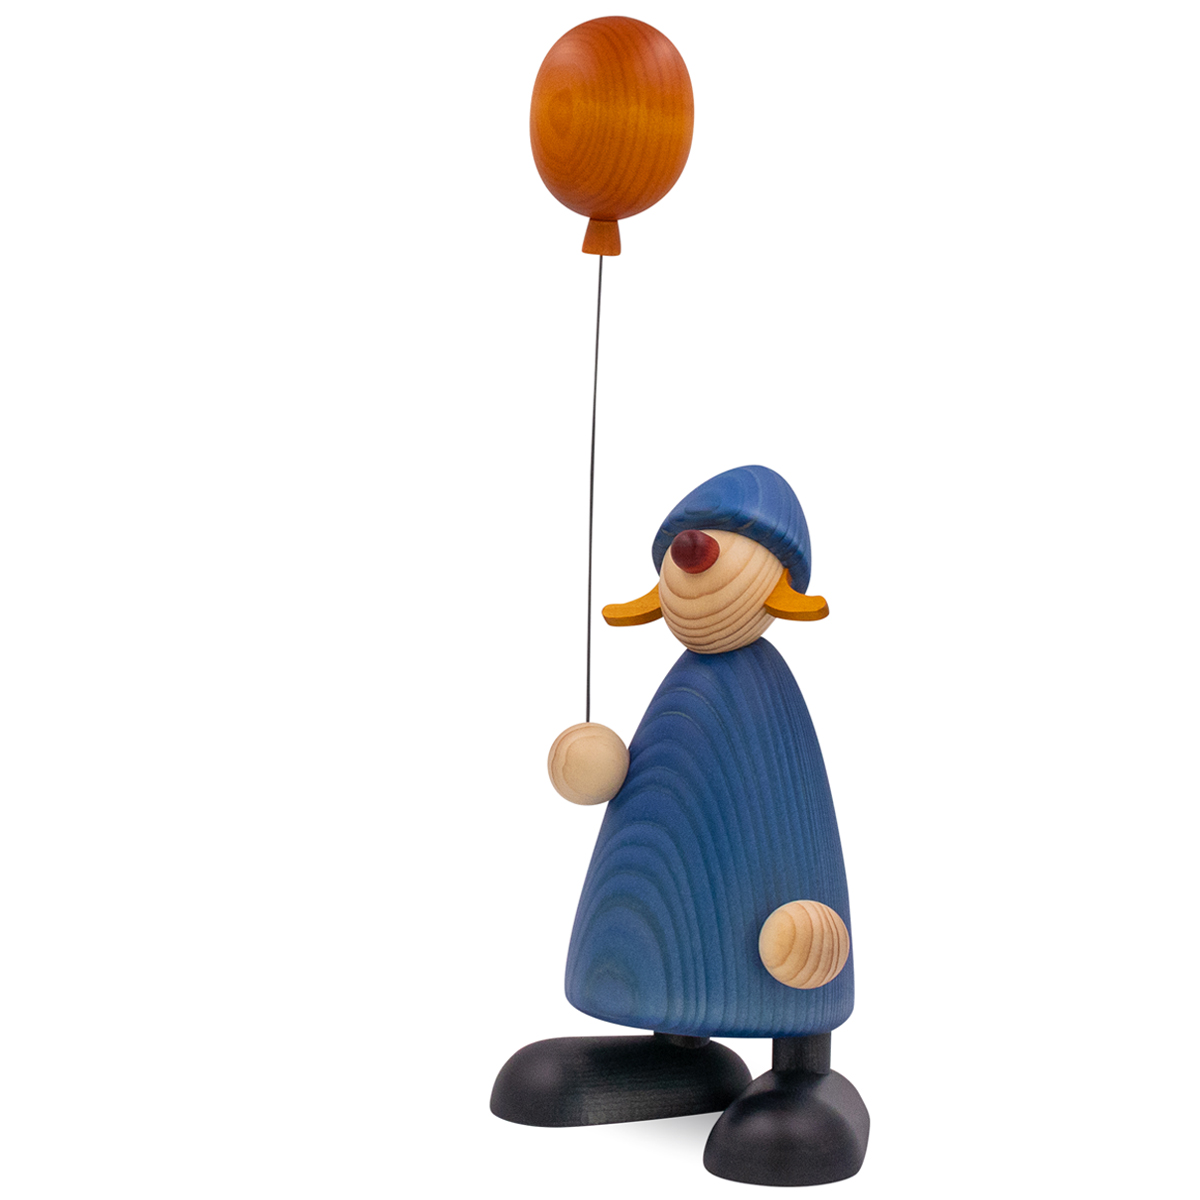 Gratulantin Lina mit gelbem Luftballon, groß, blau